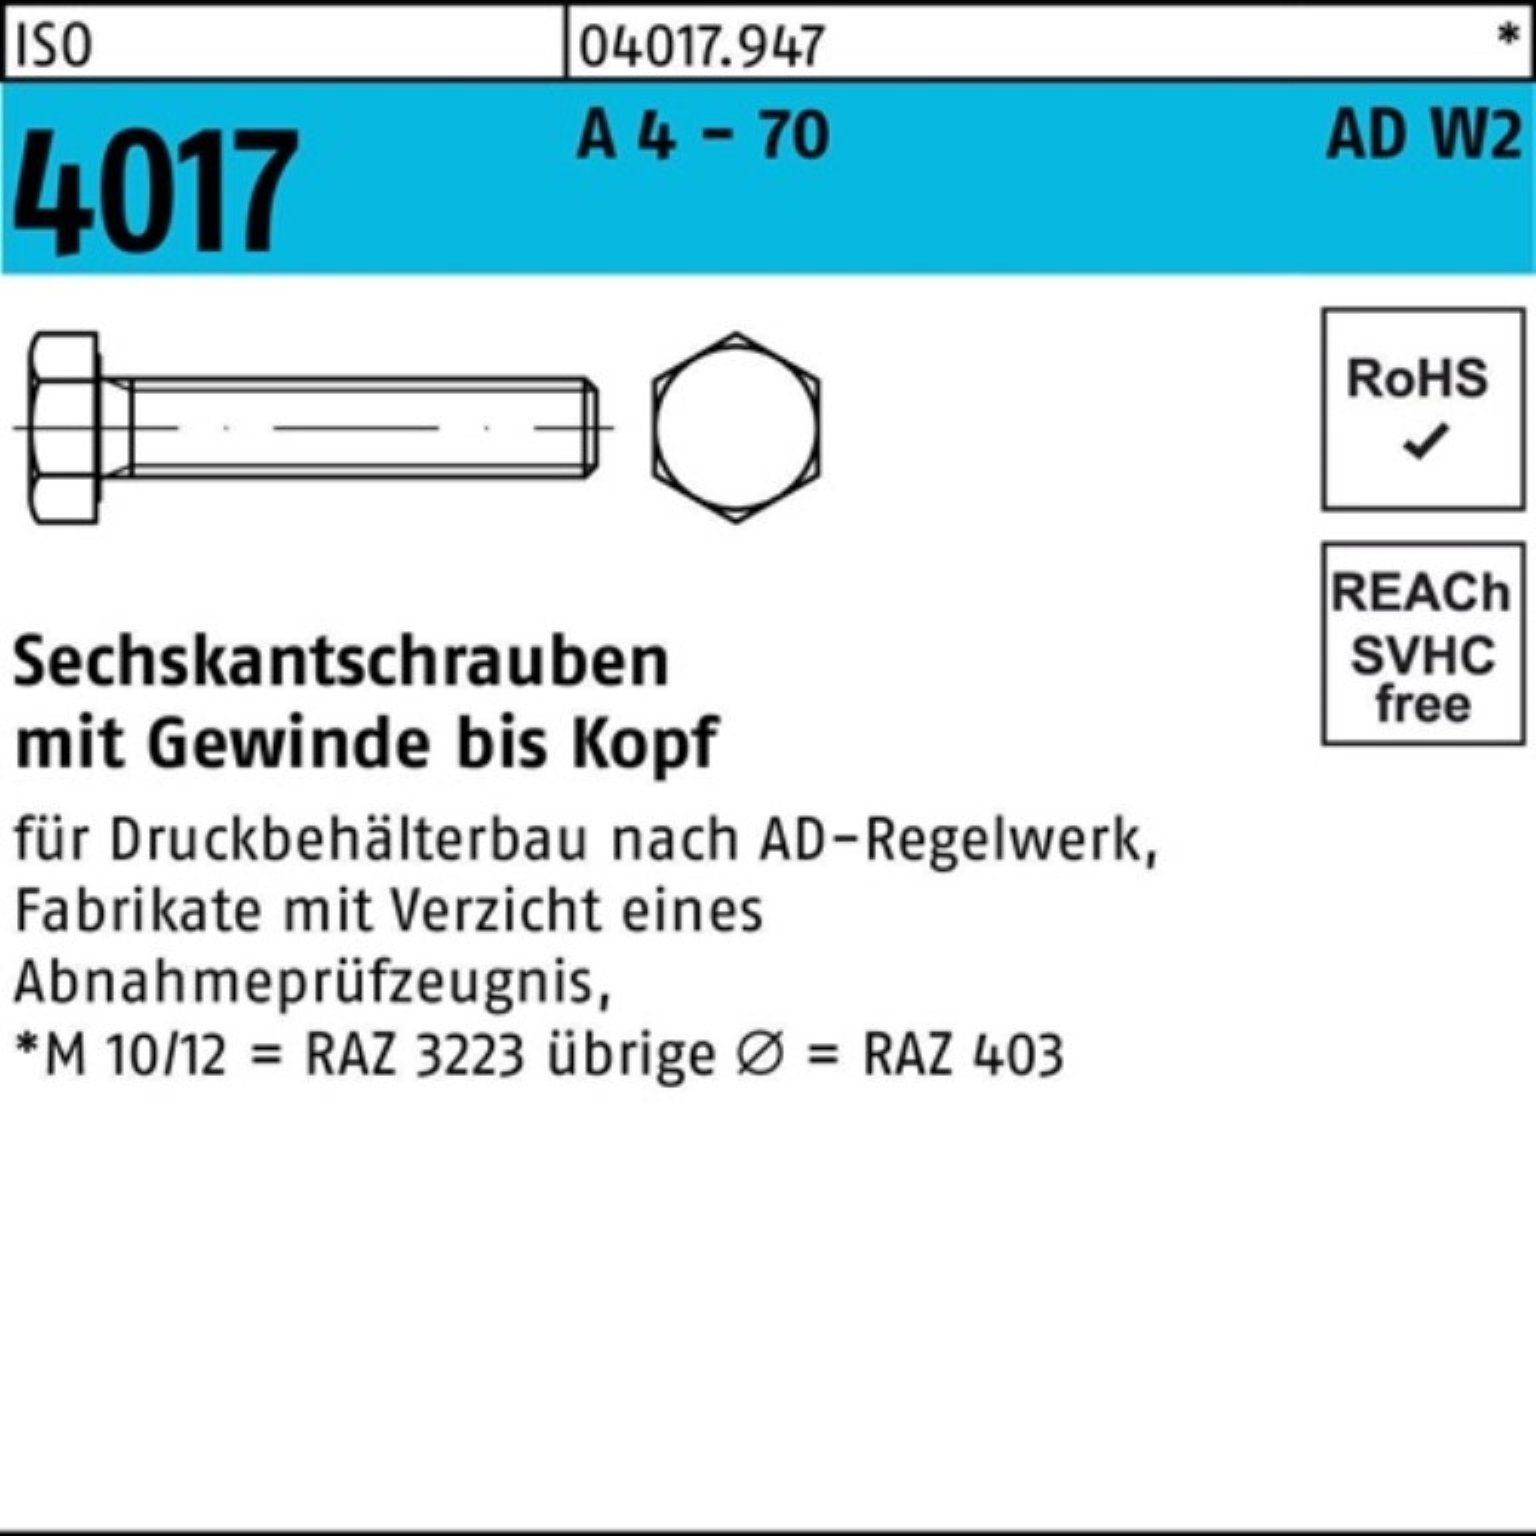 Bufab Sechskantschraube 100er Pack Sechskantschraube ISO 4017 VG M20x 60 A 4 - 70 AD-W2 25 St